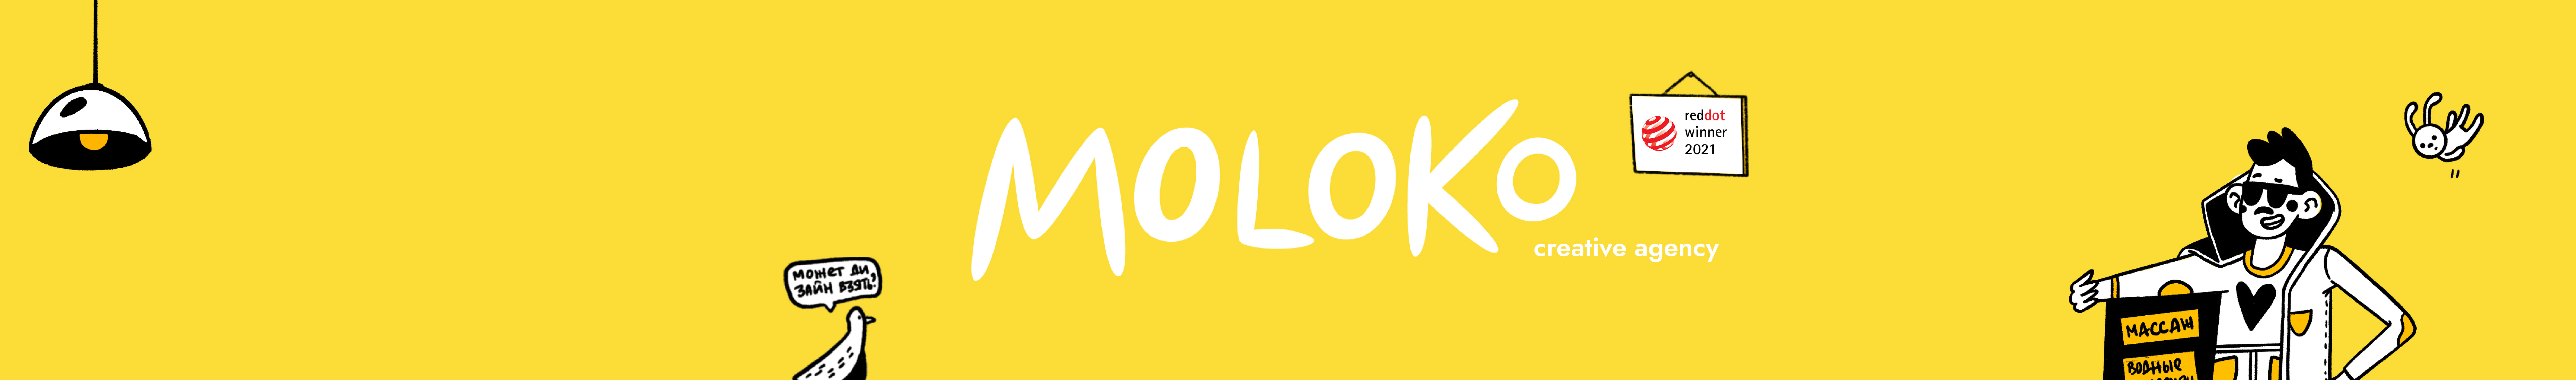 Moloko Creative Agency's profile banner